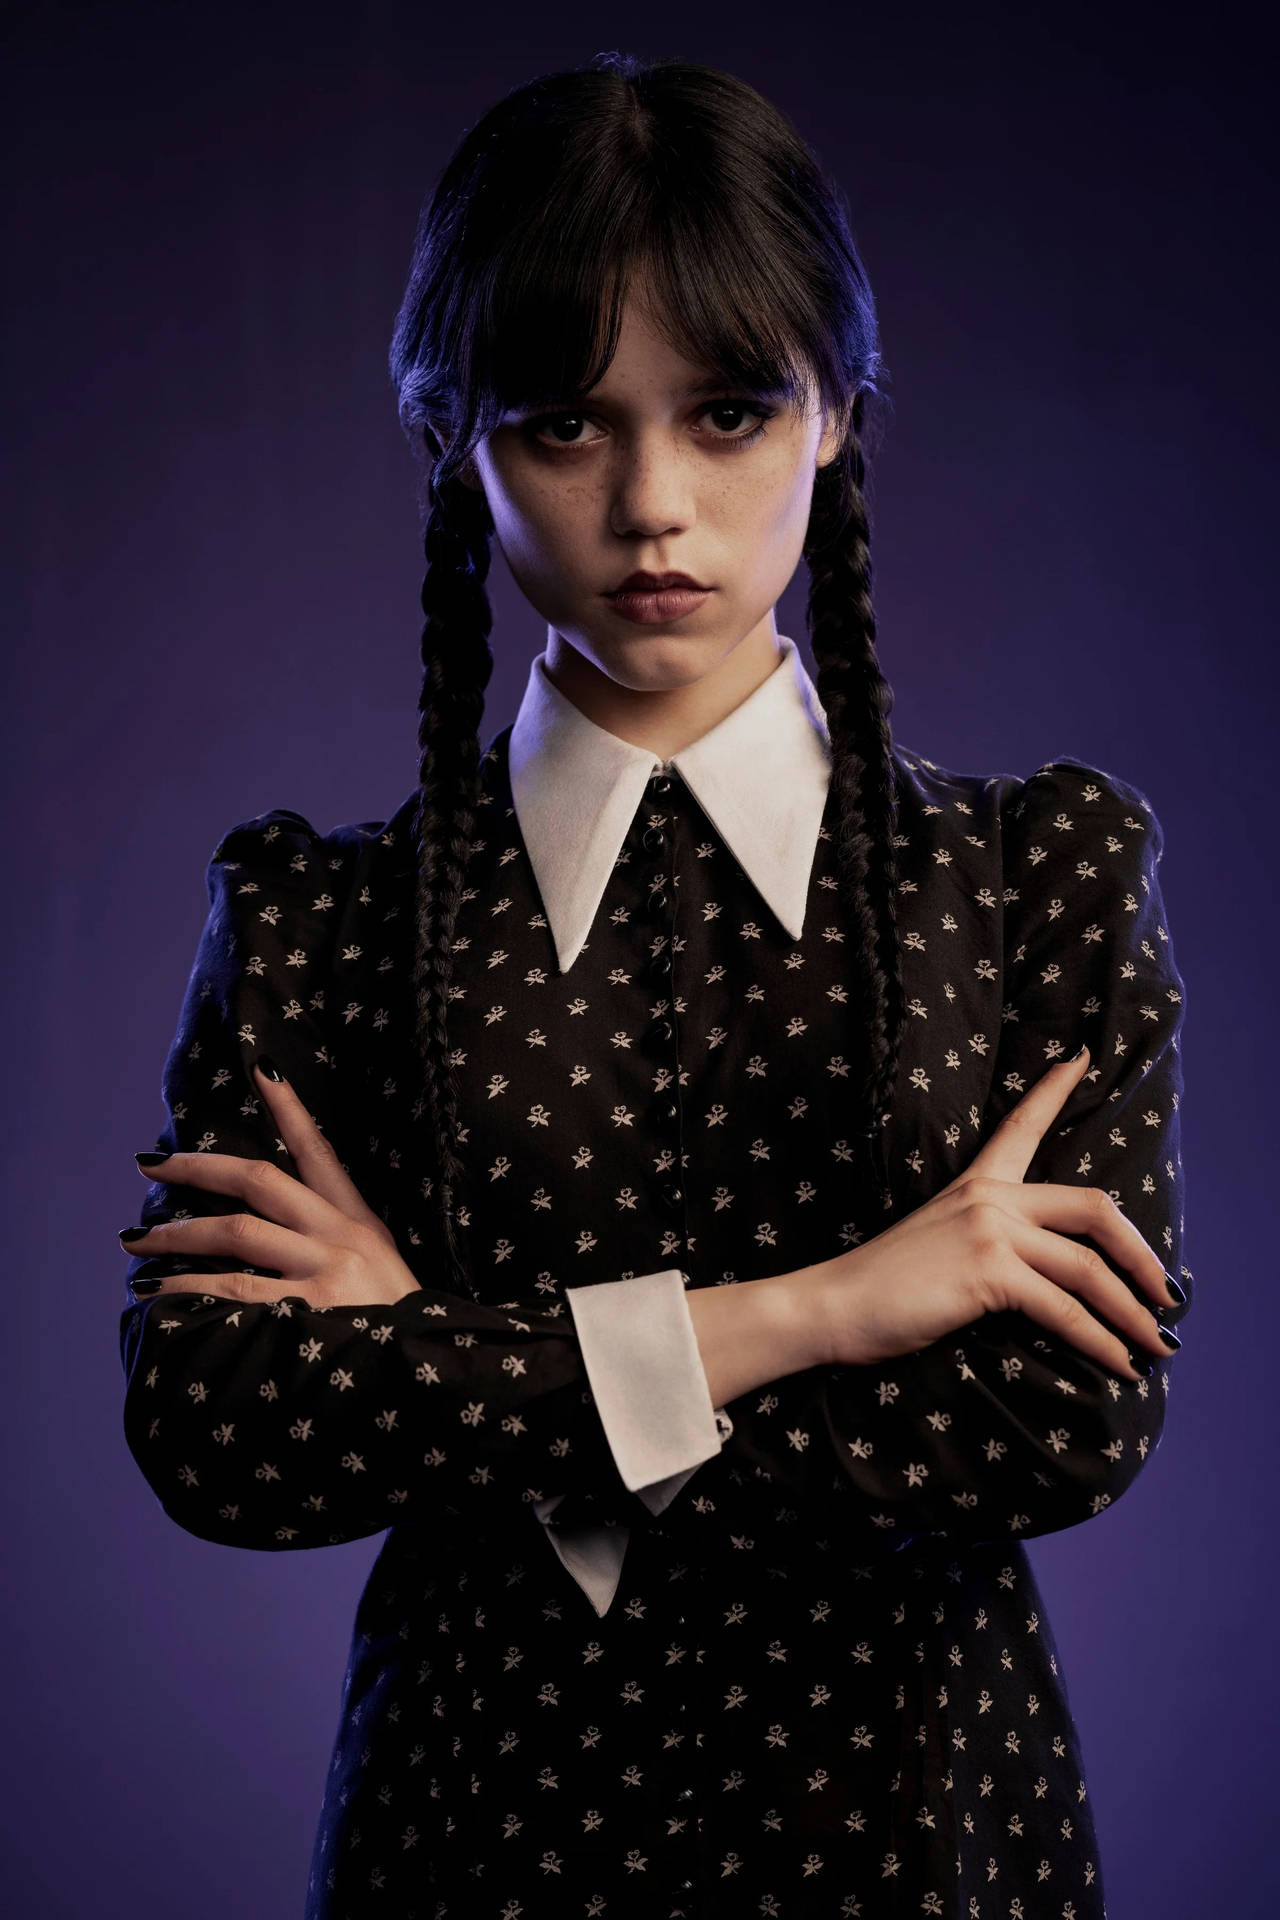 Teenage Girl Wednesday Addams Wallpaper